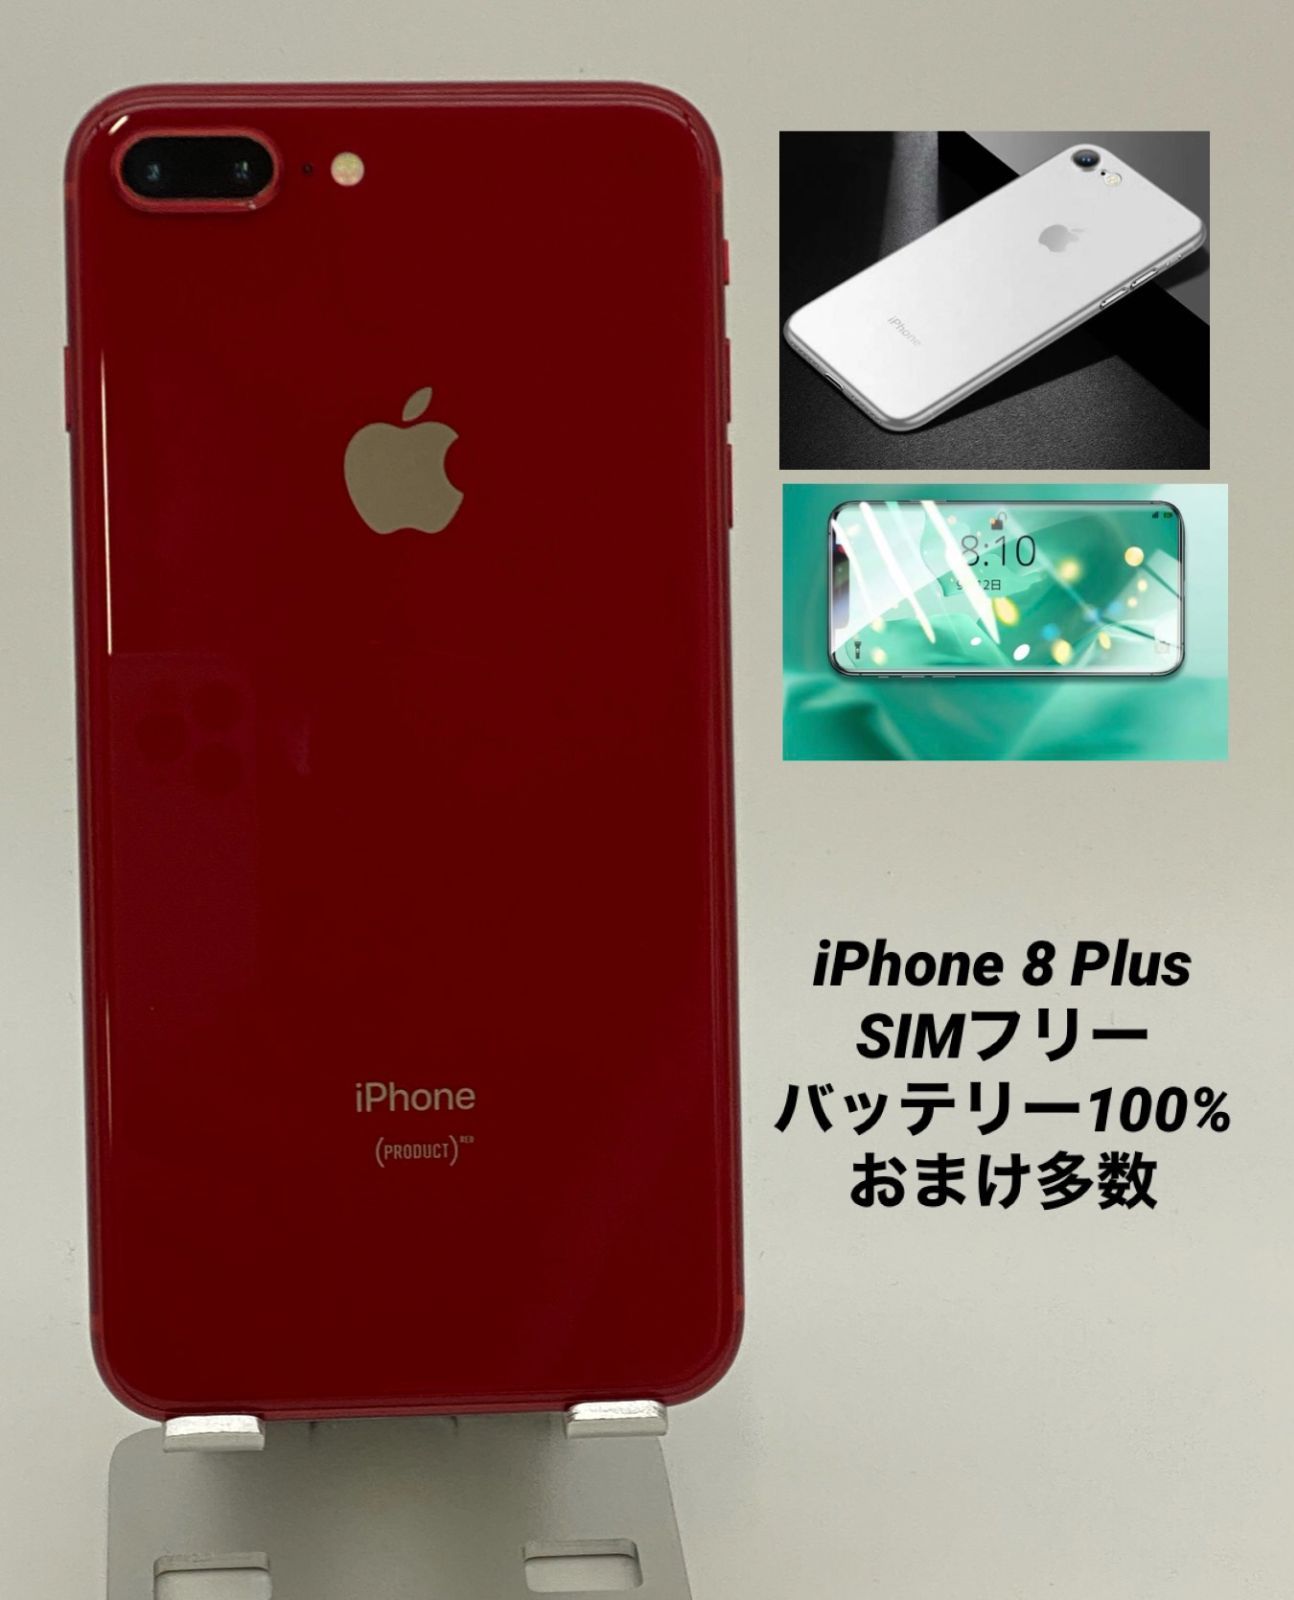 iPhone8 Plus 256GB レッド/シムフリー/大容量3400mAh新品バッテリー